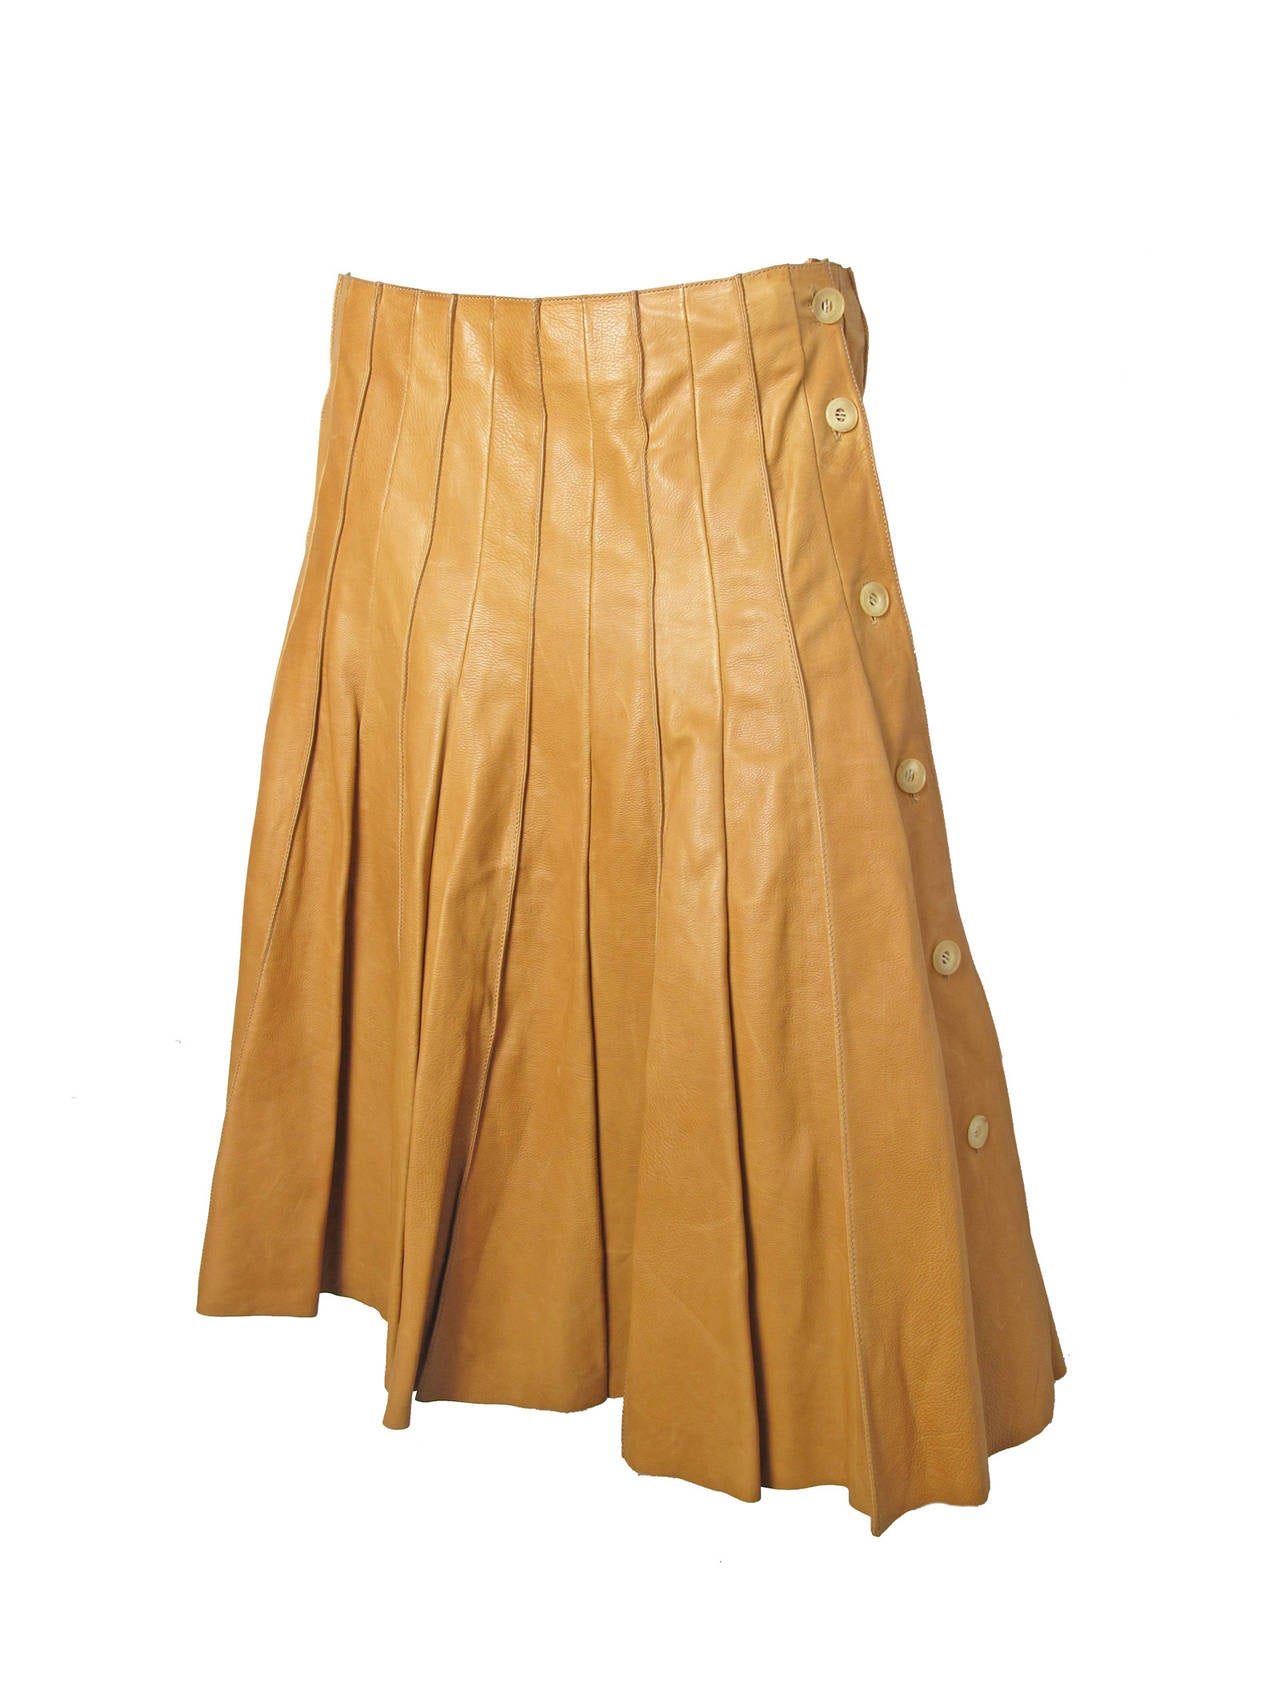 Rare Hermes Soft Leather Pleated Skirt Runway by JPG 1